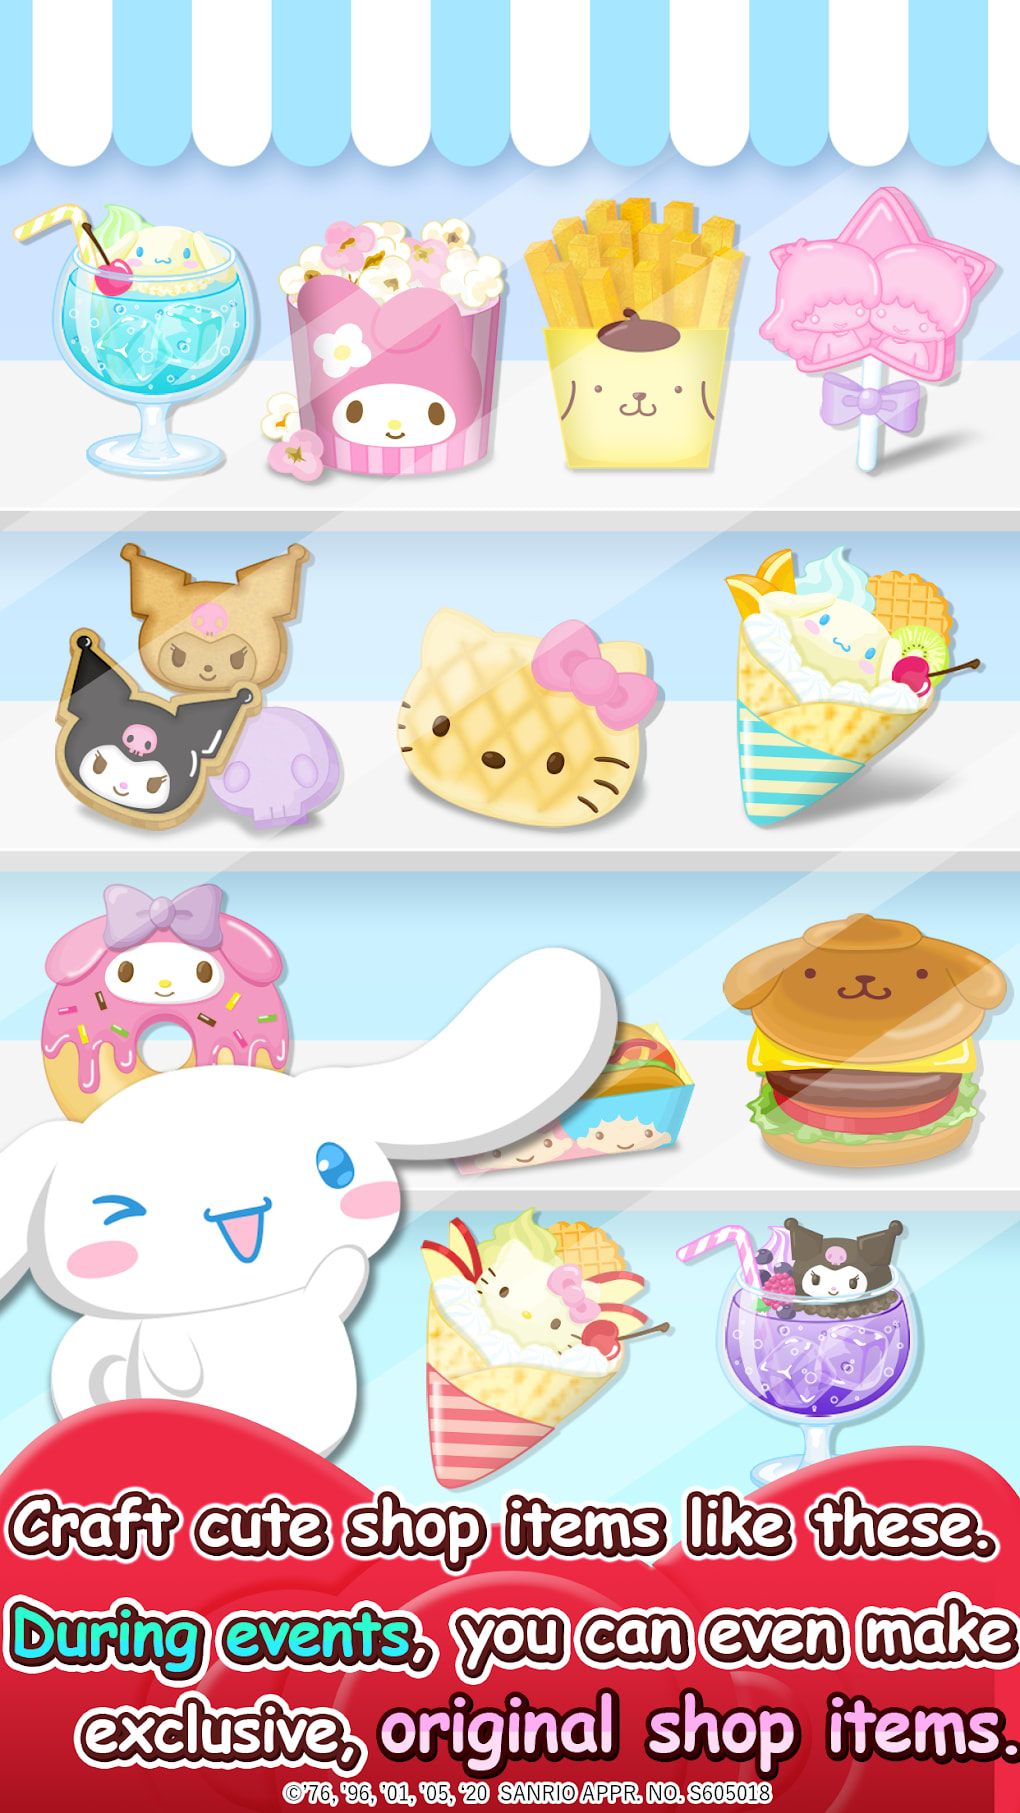 Hello Kitty World 2 Sanrio Kawaii Theme Park Game for Android